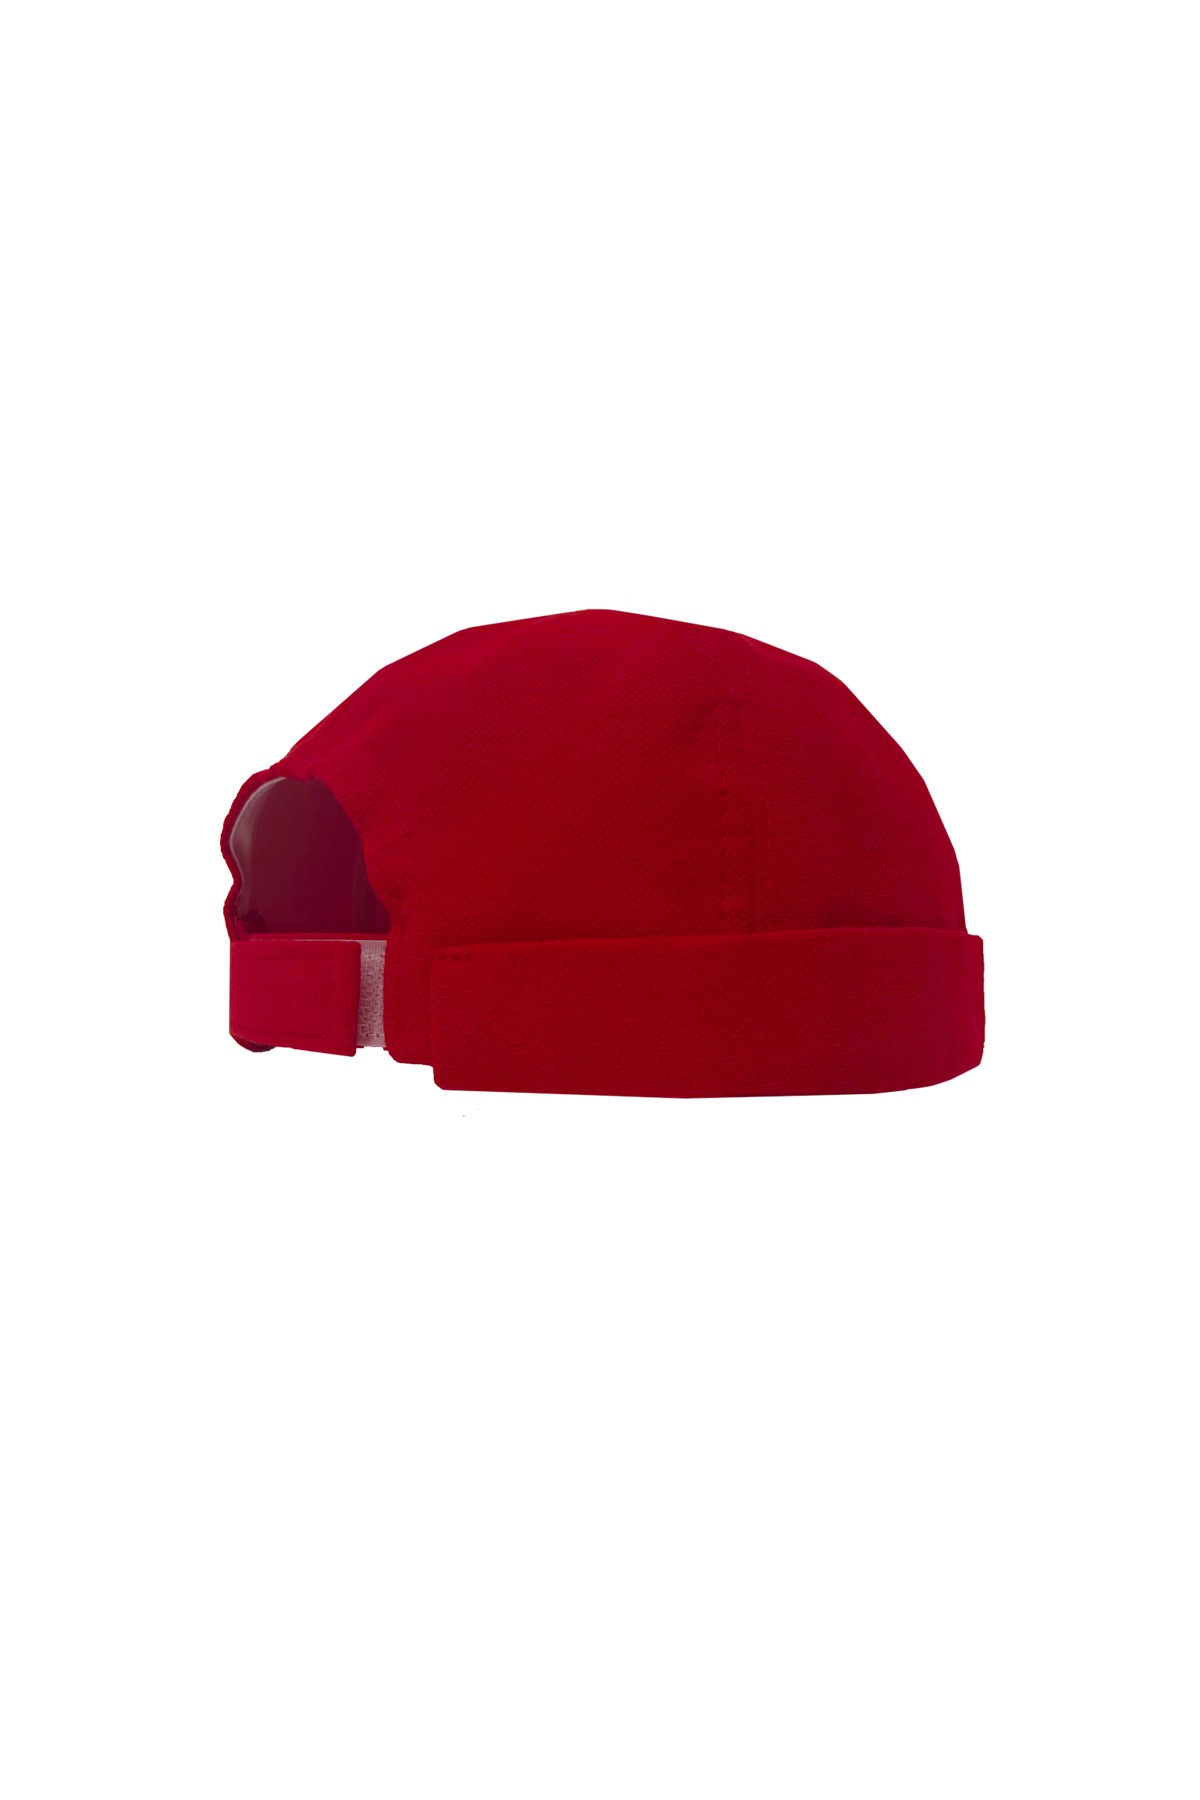 Nuo - قبعة - أحمر